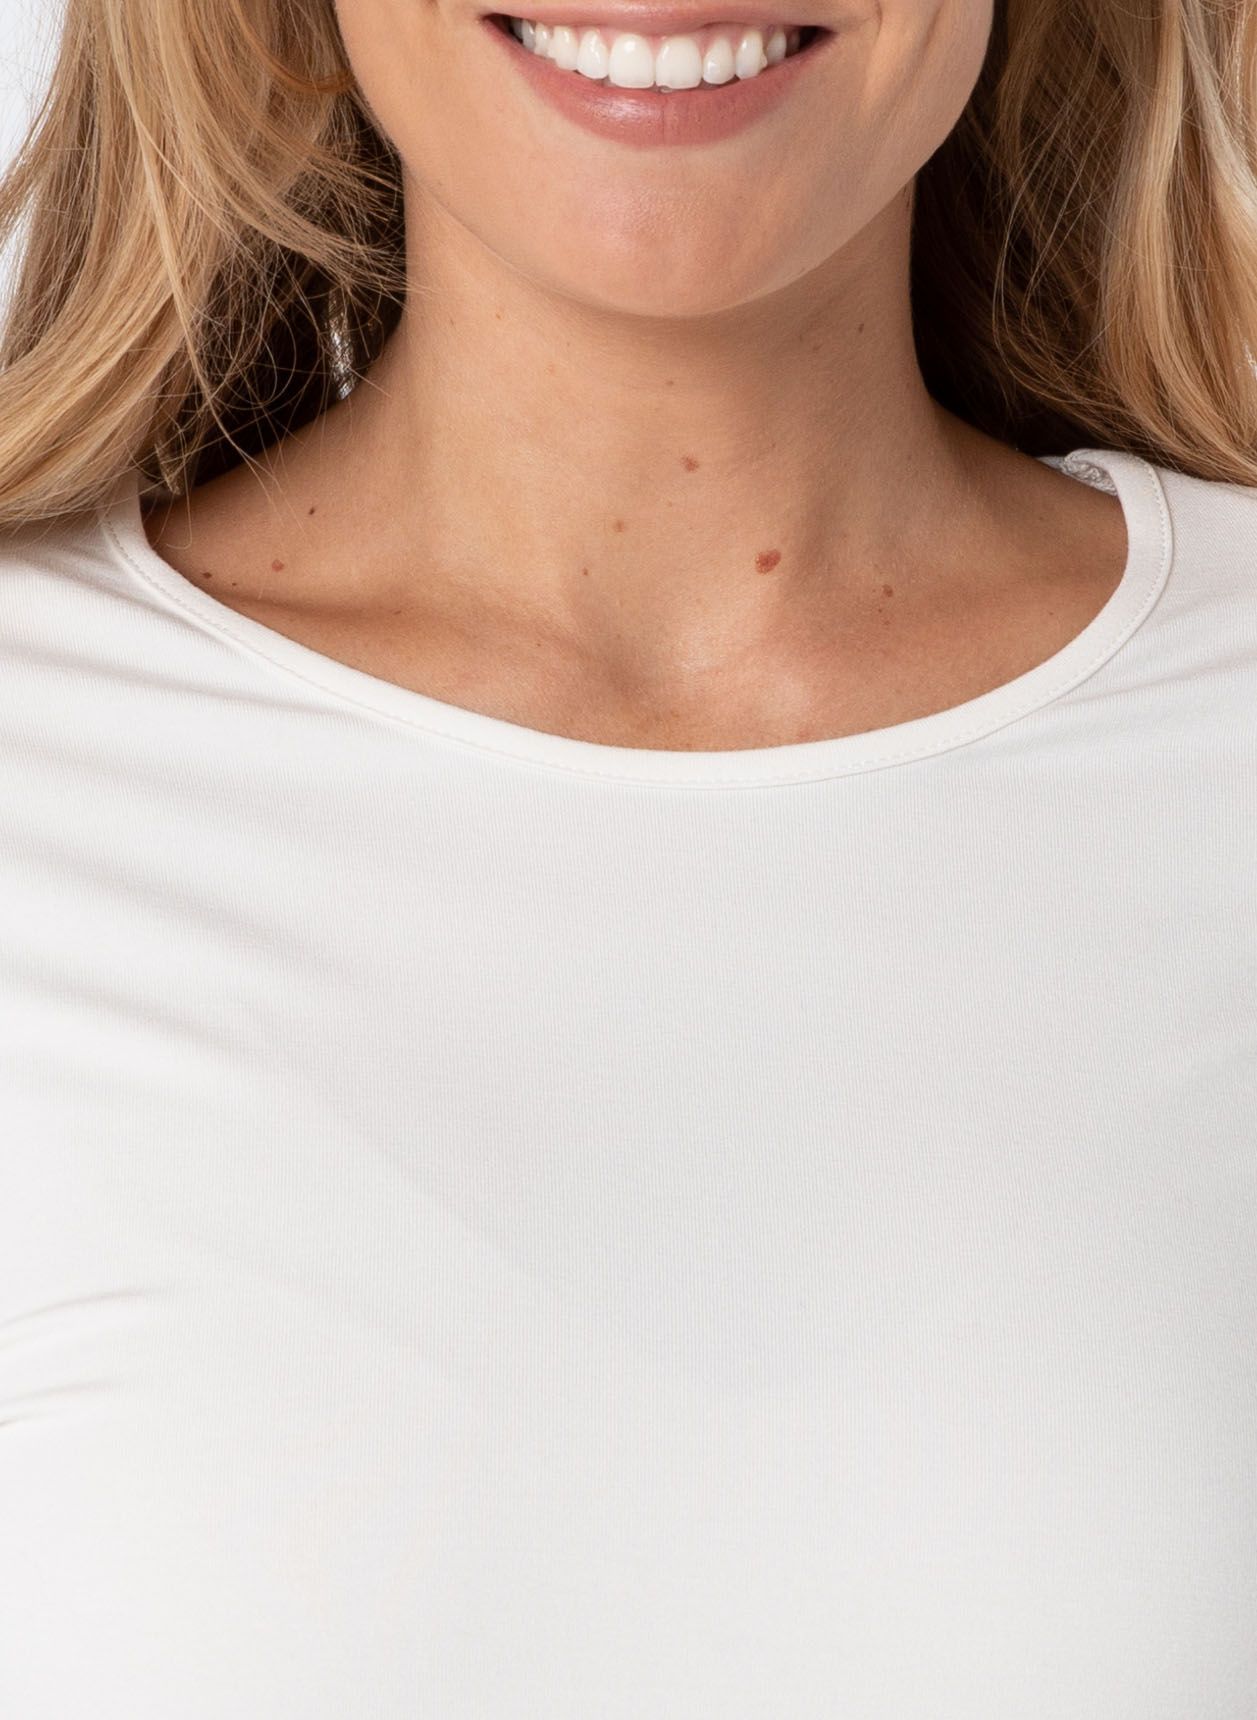 Norah Shirt gebroken wit off-white 212206-101